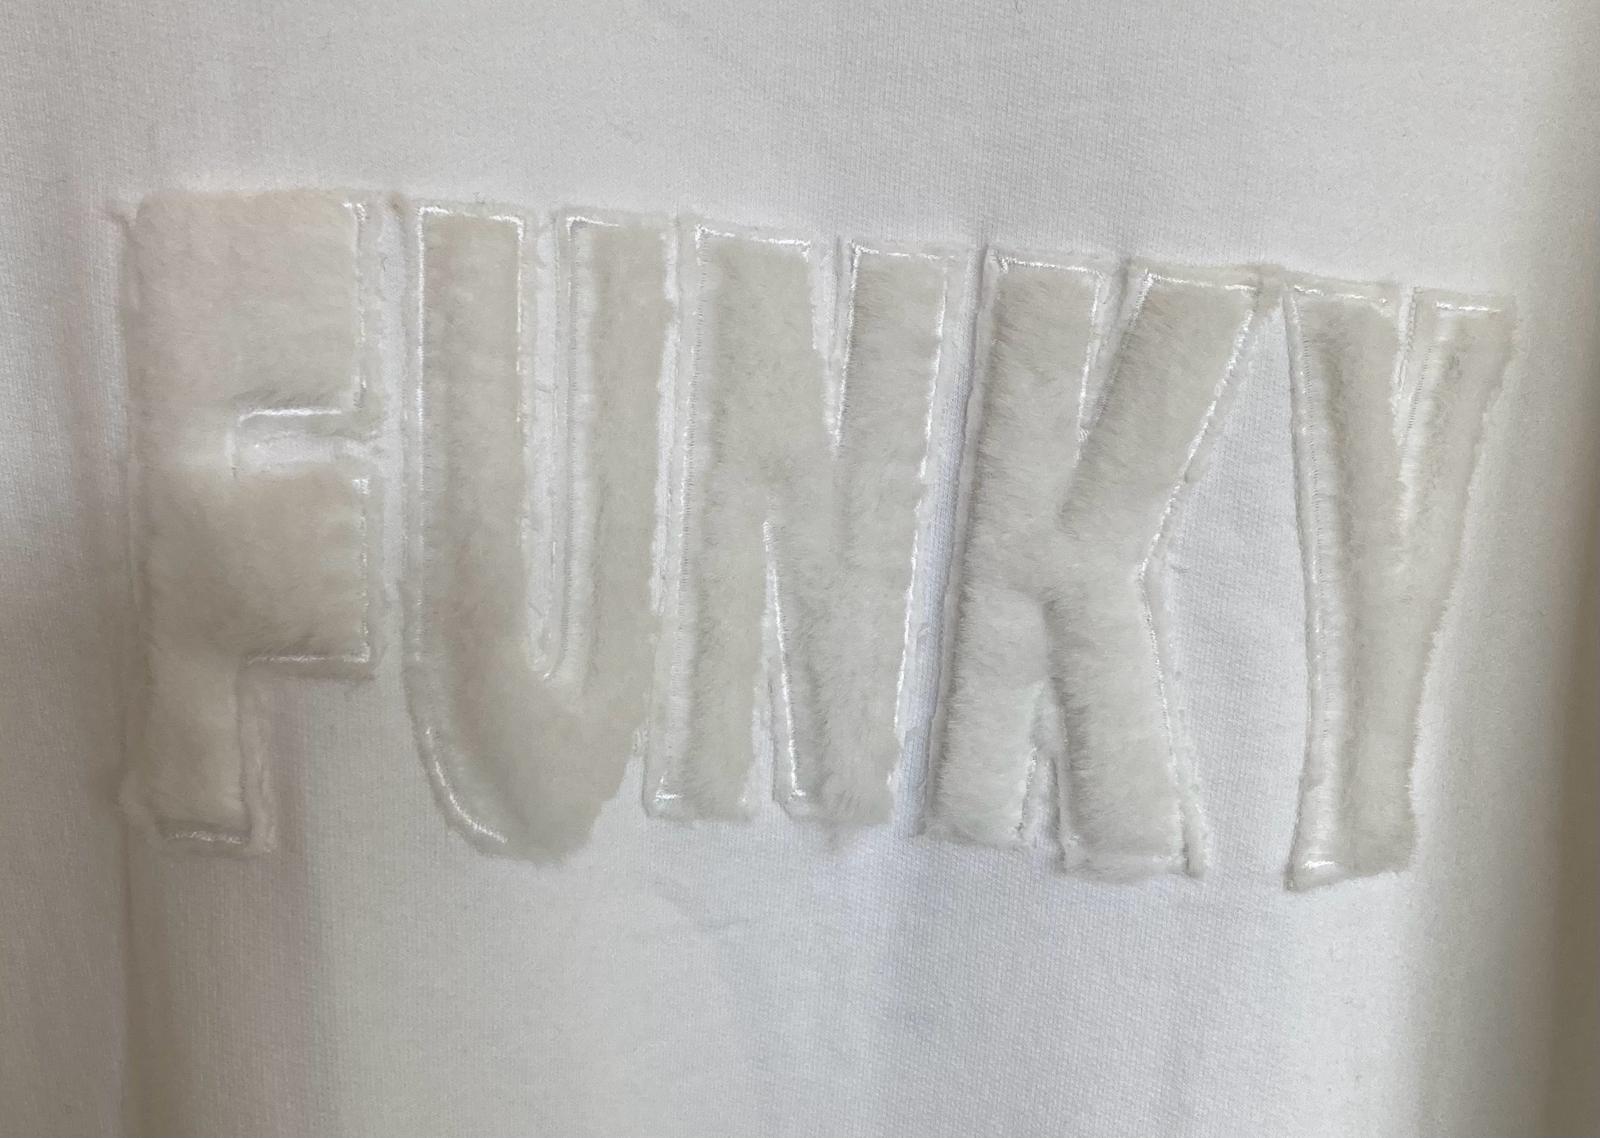 Funky Staff FUNKY sweatshirt - Maya Maya Ltd